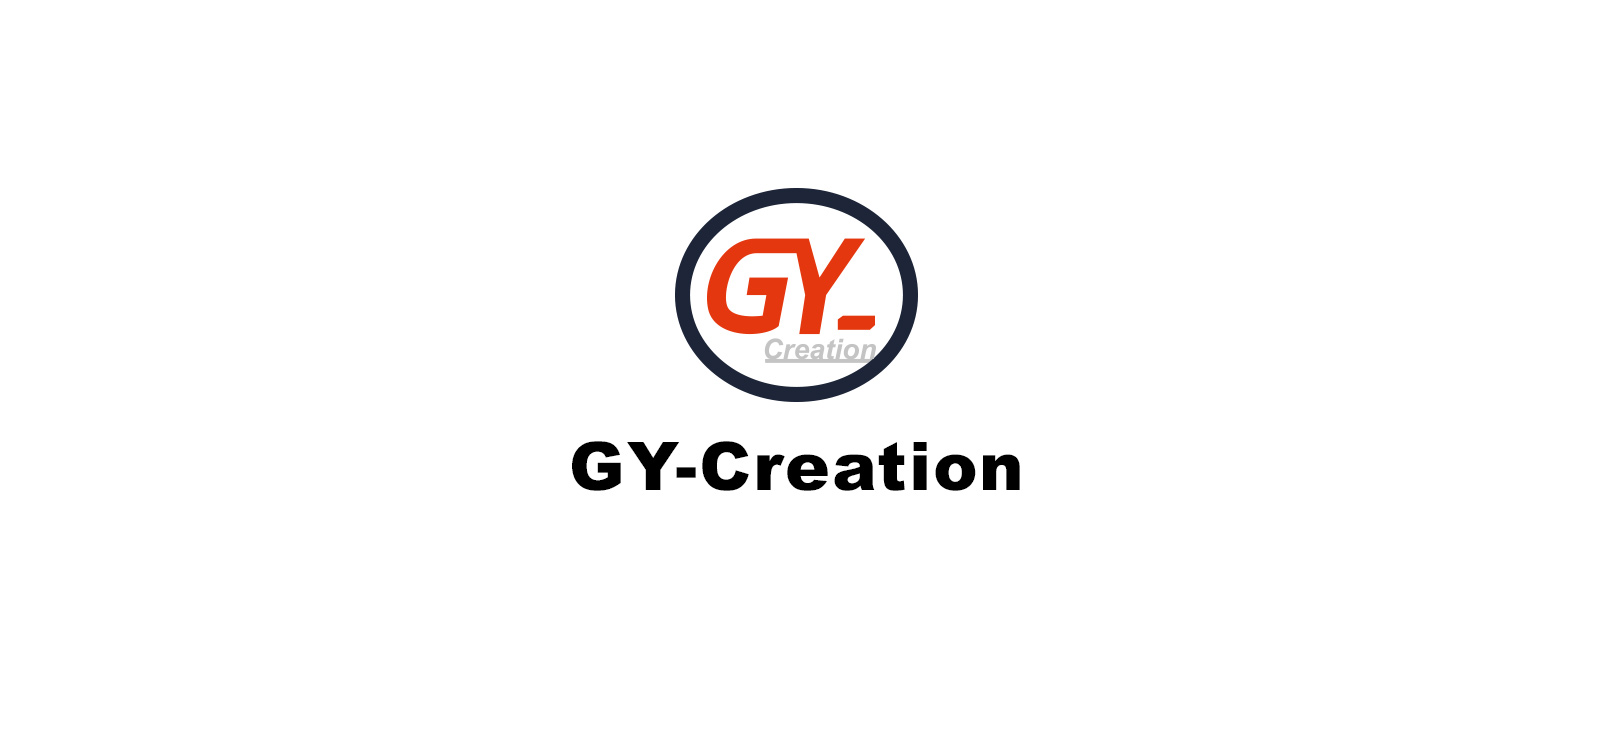 GY-Creation